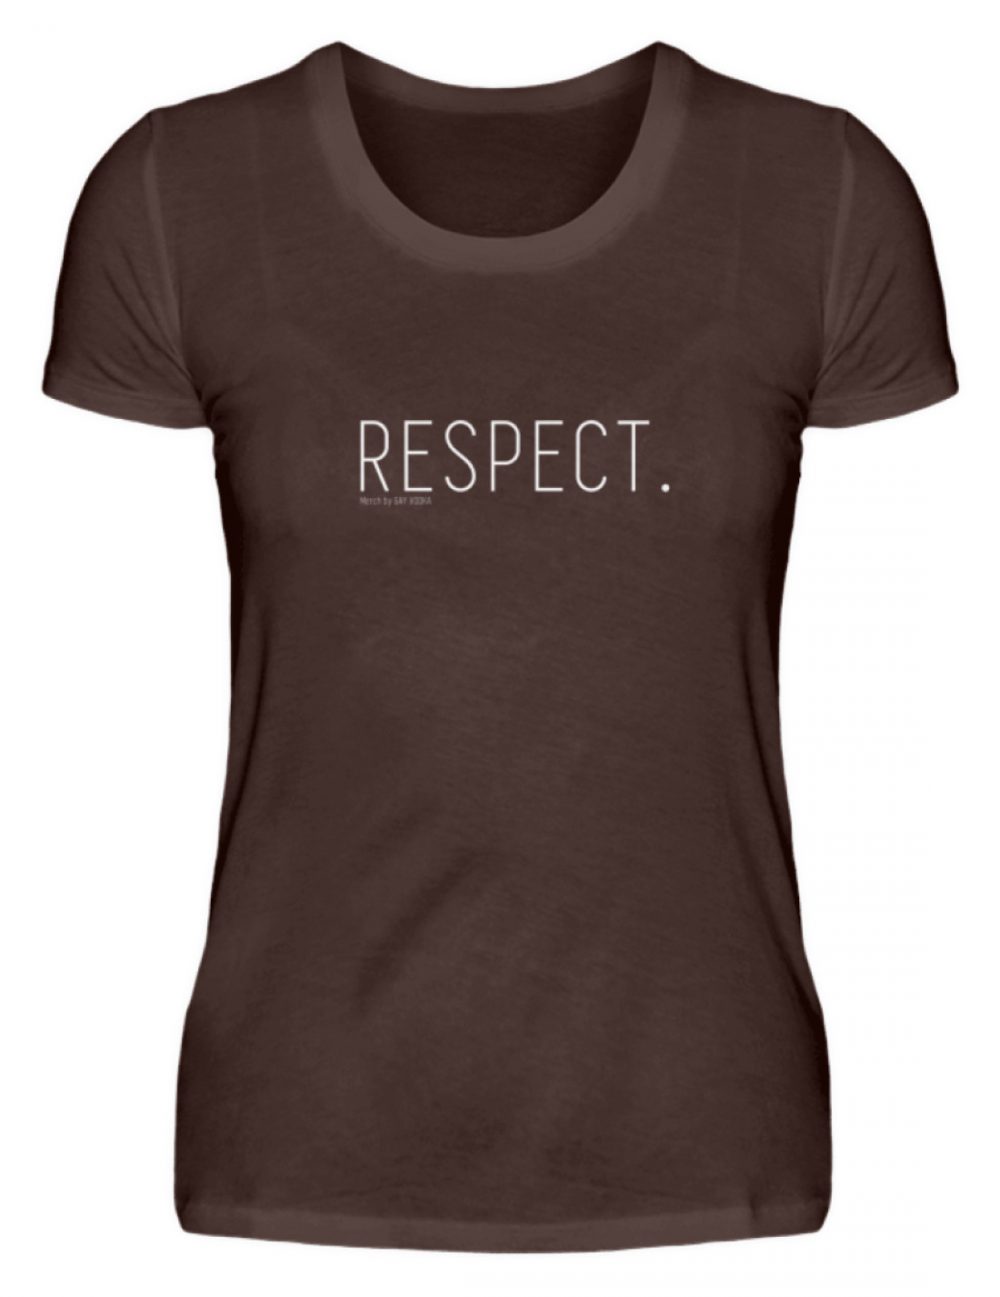 RESPECT. - Damen Premiumshirt-1074